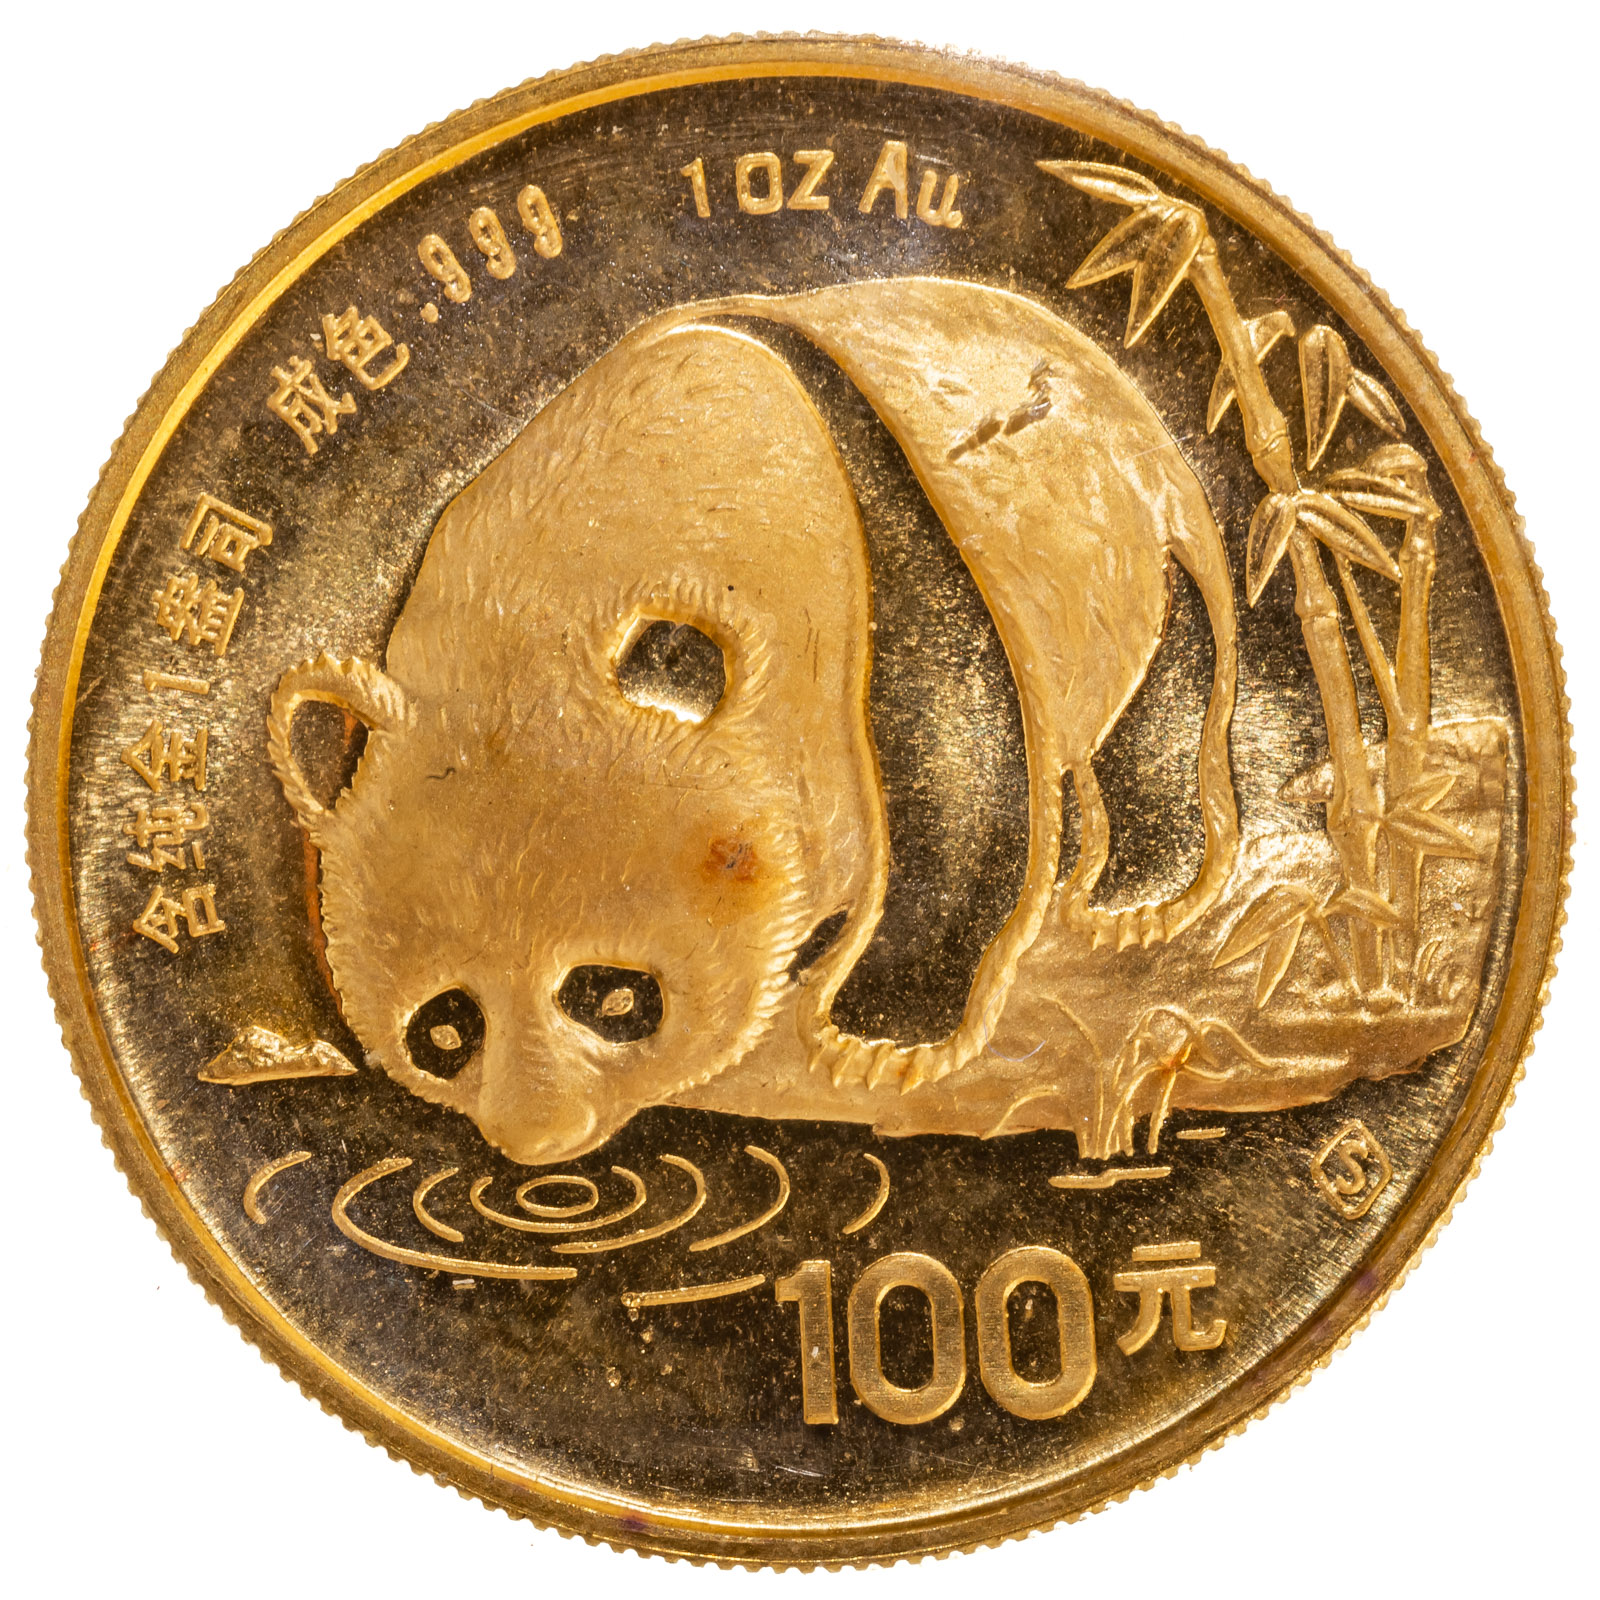 1987 100 YUAN GOLD PANDA UNC Sealed 287a14